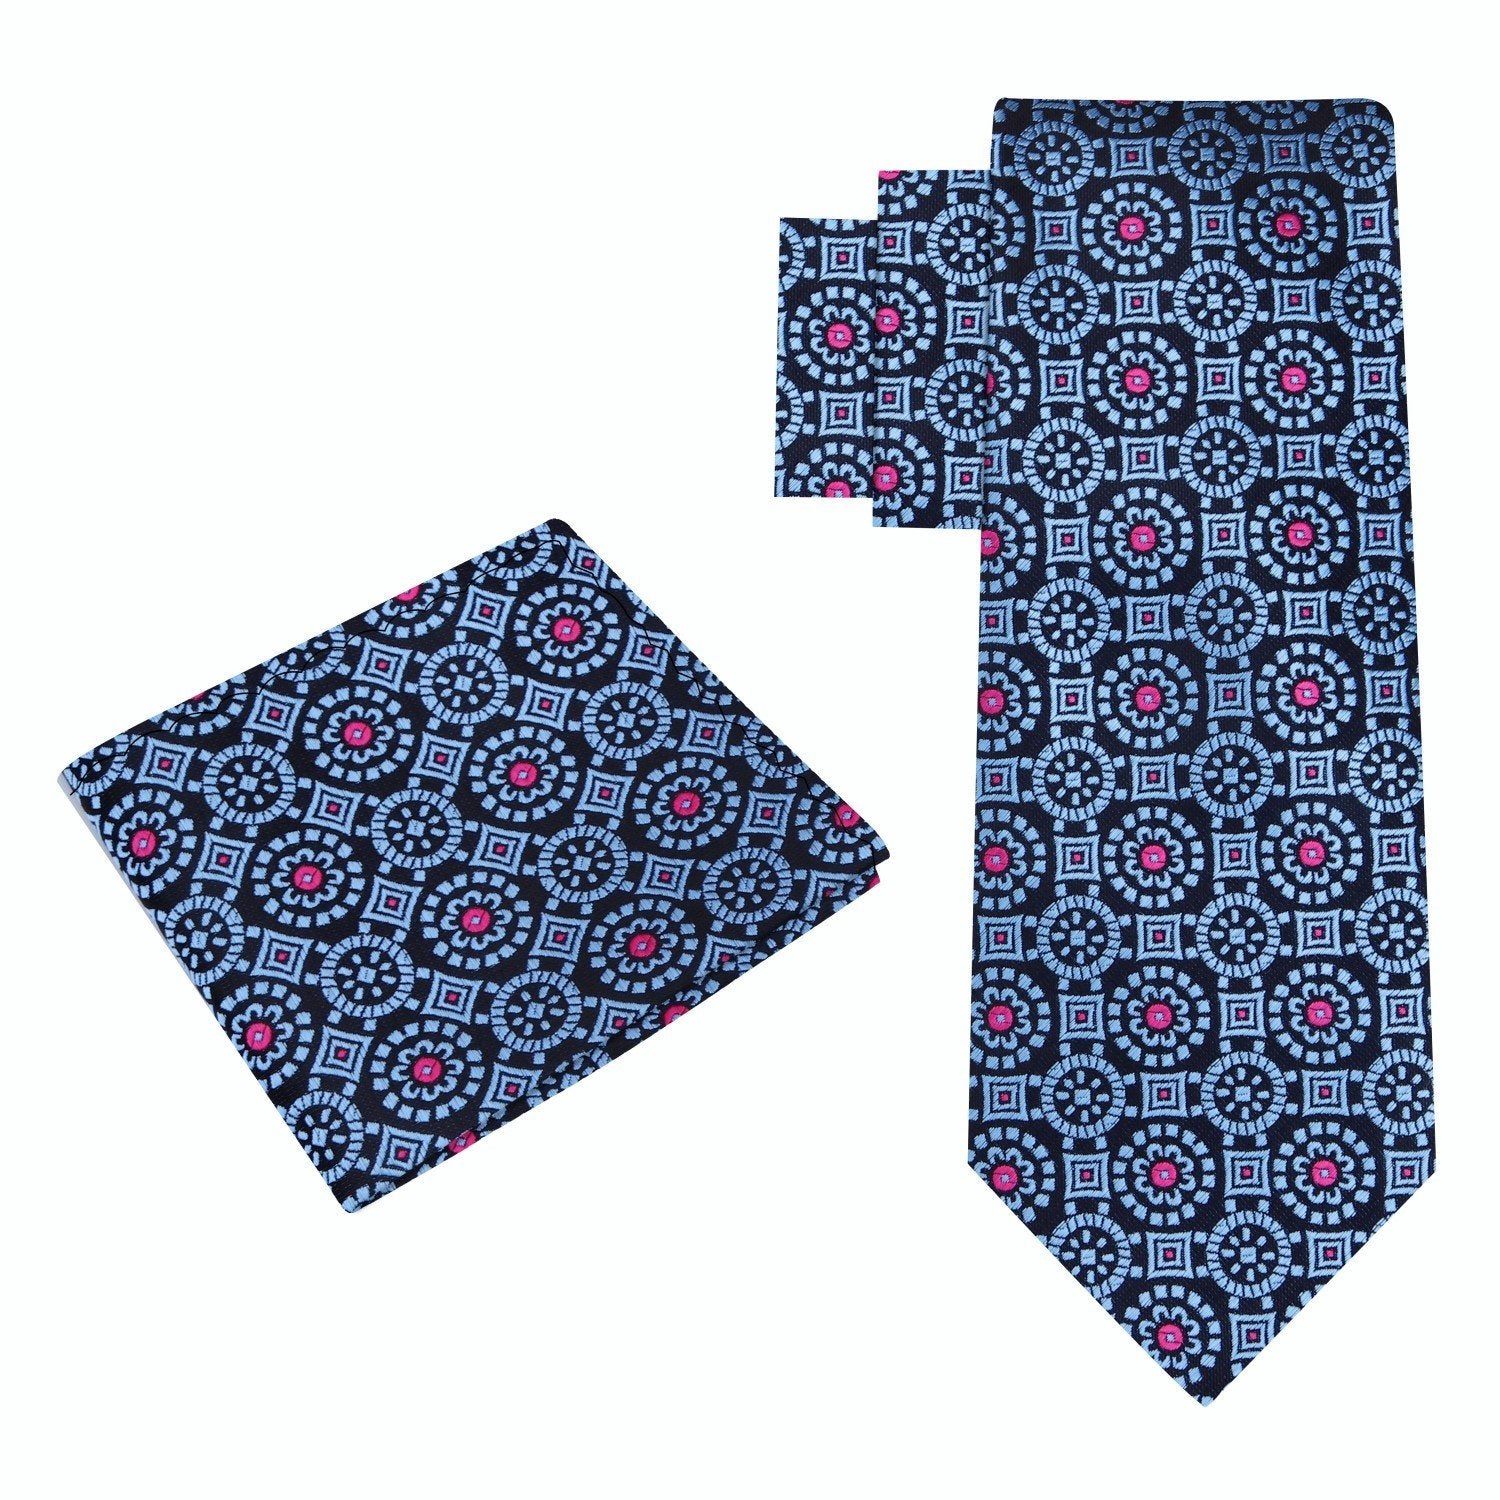 Alternate View: Black, Blue Pink Geometric Tie and Square